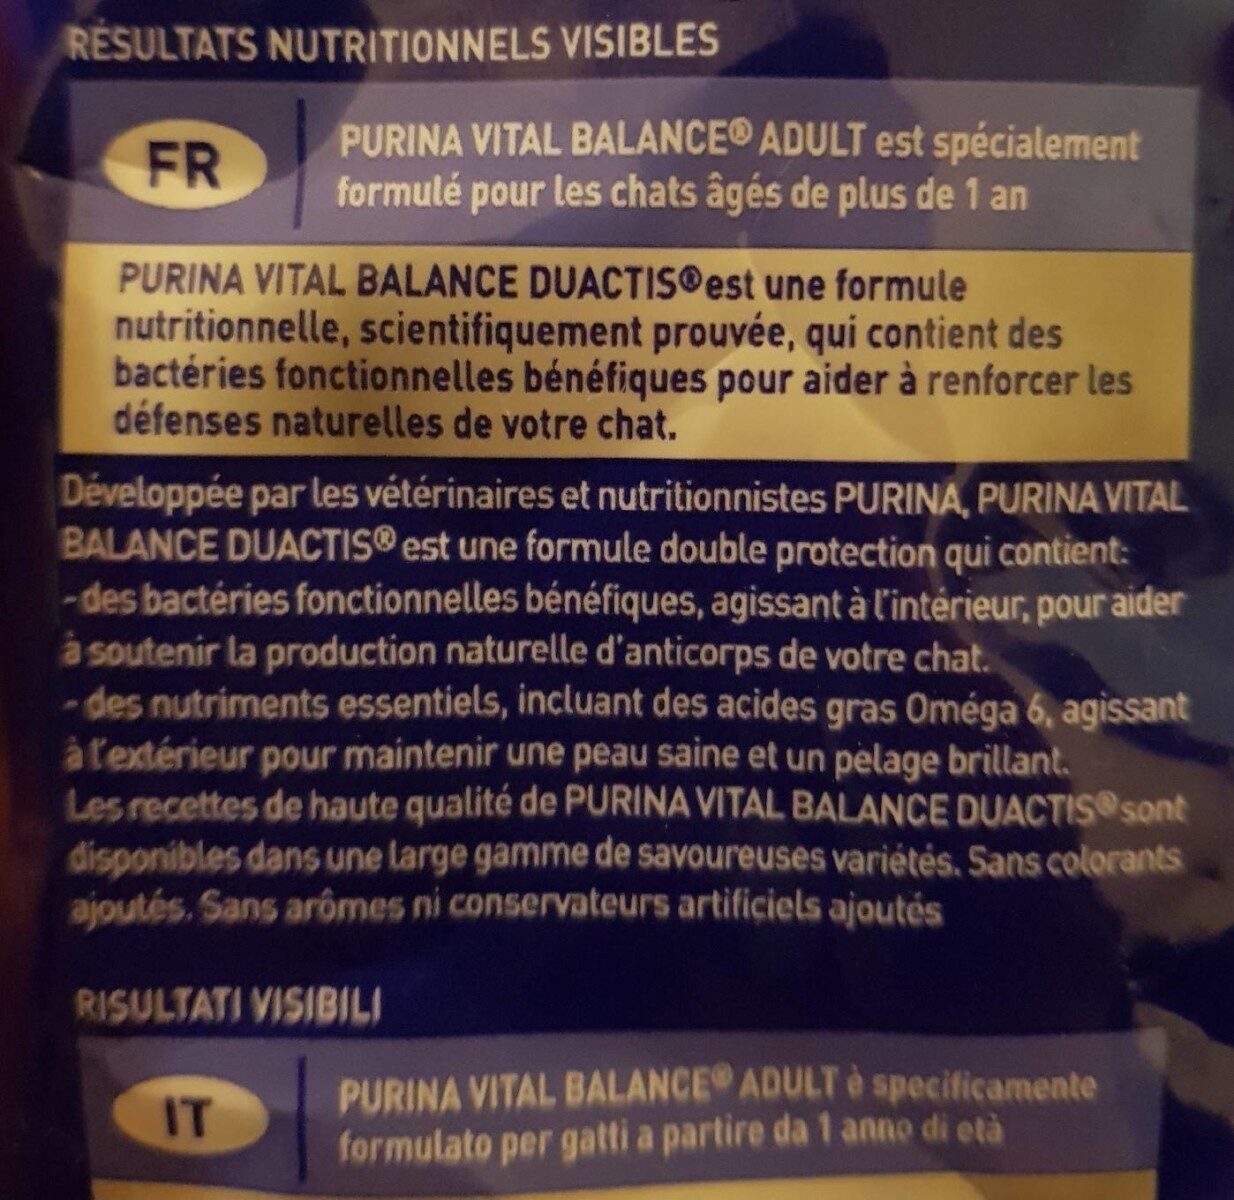 Duactis Dual protection Purina Vital Balance - Nutrition facts - fr